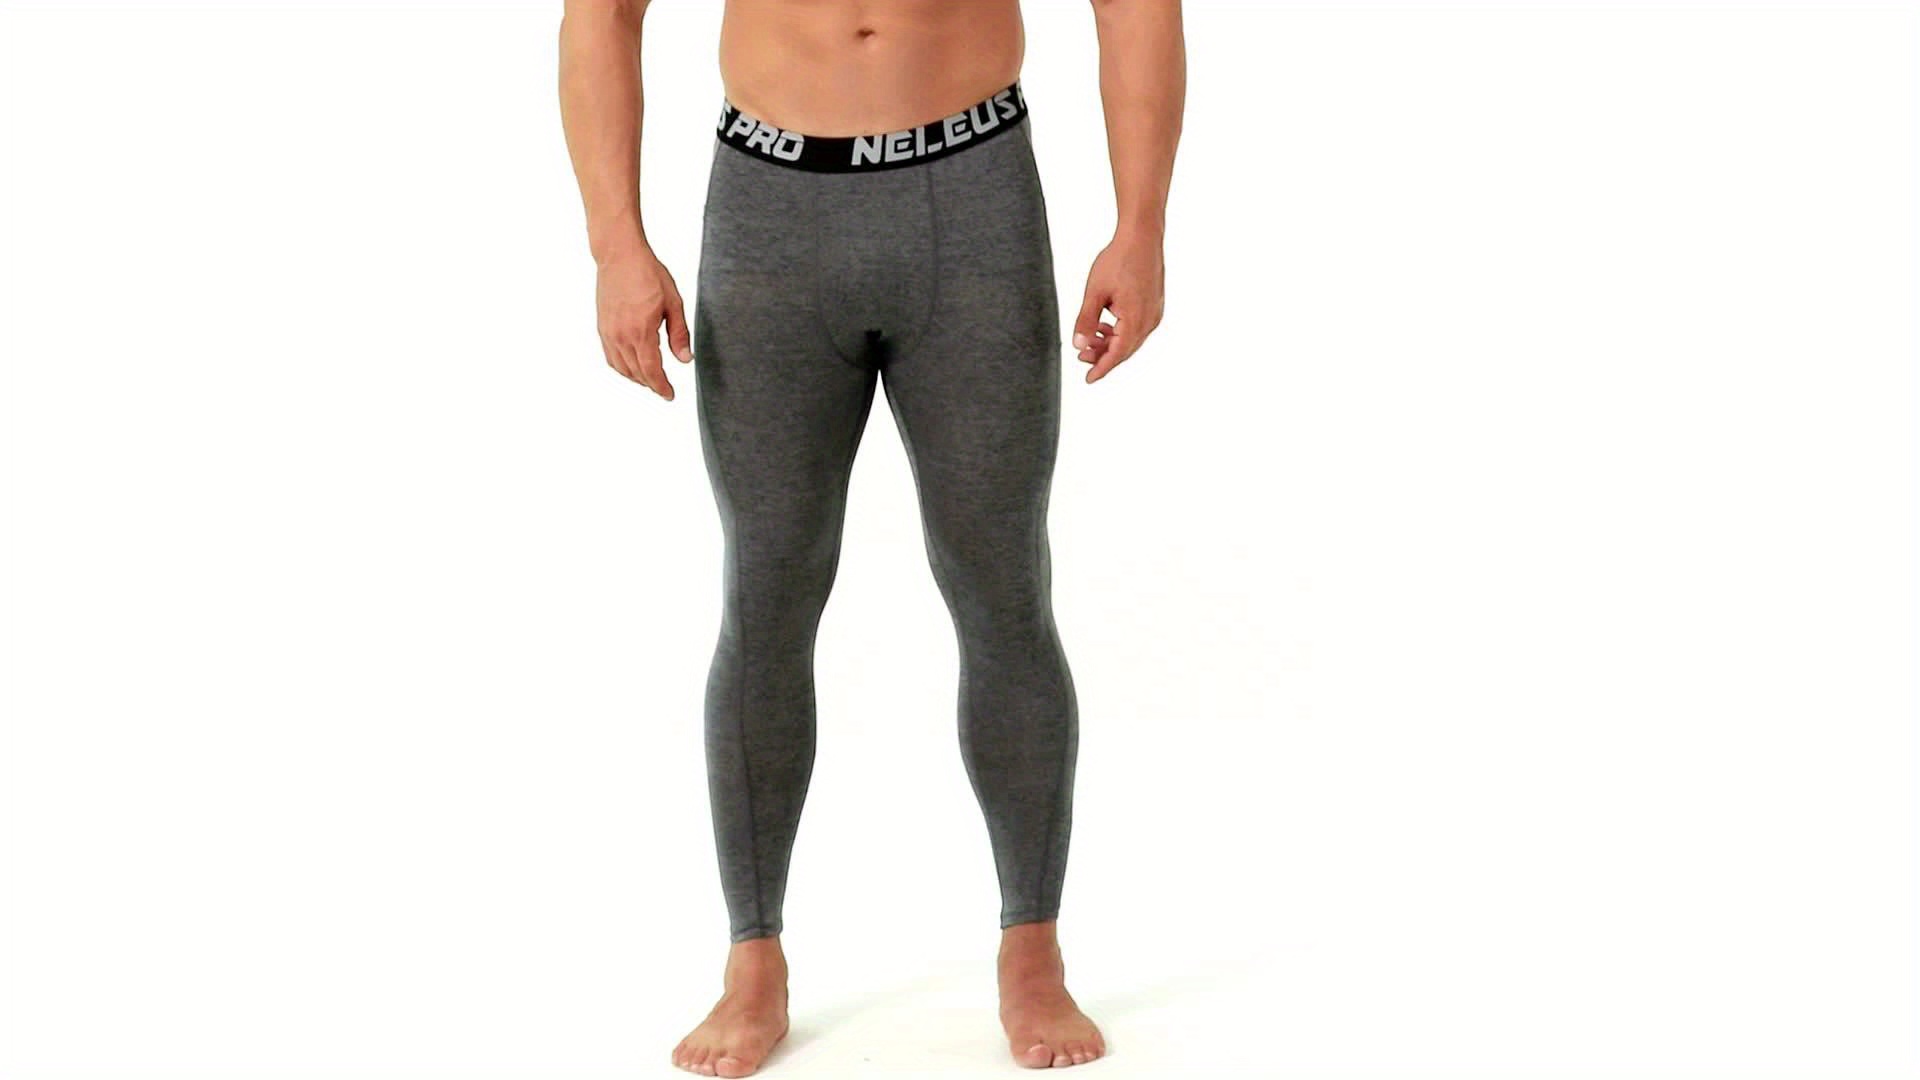 NELEUS Mens Dry Fit Compression Pants Workout Running Leggings